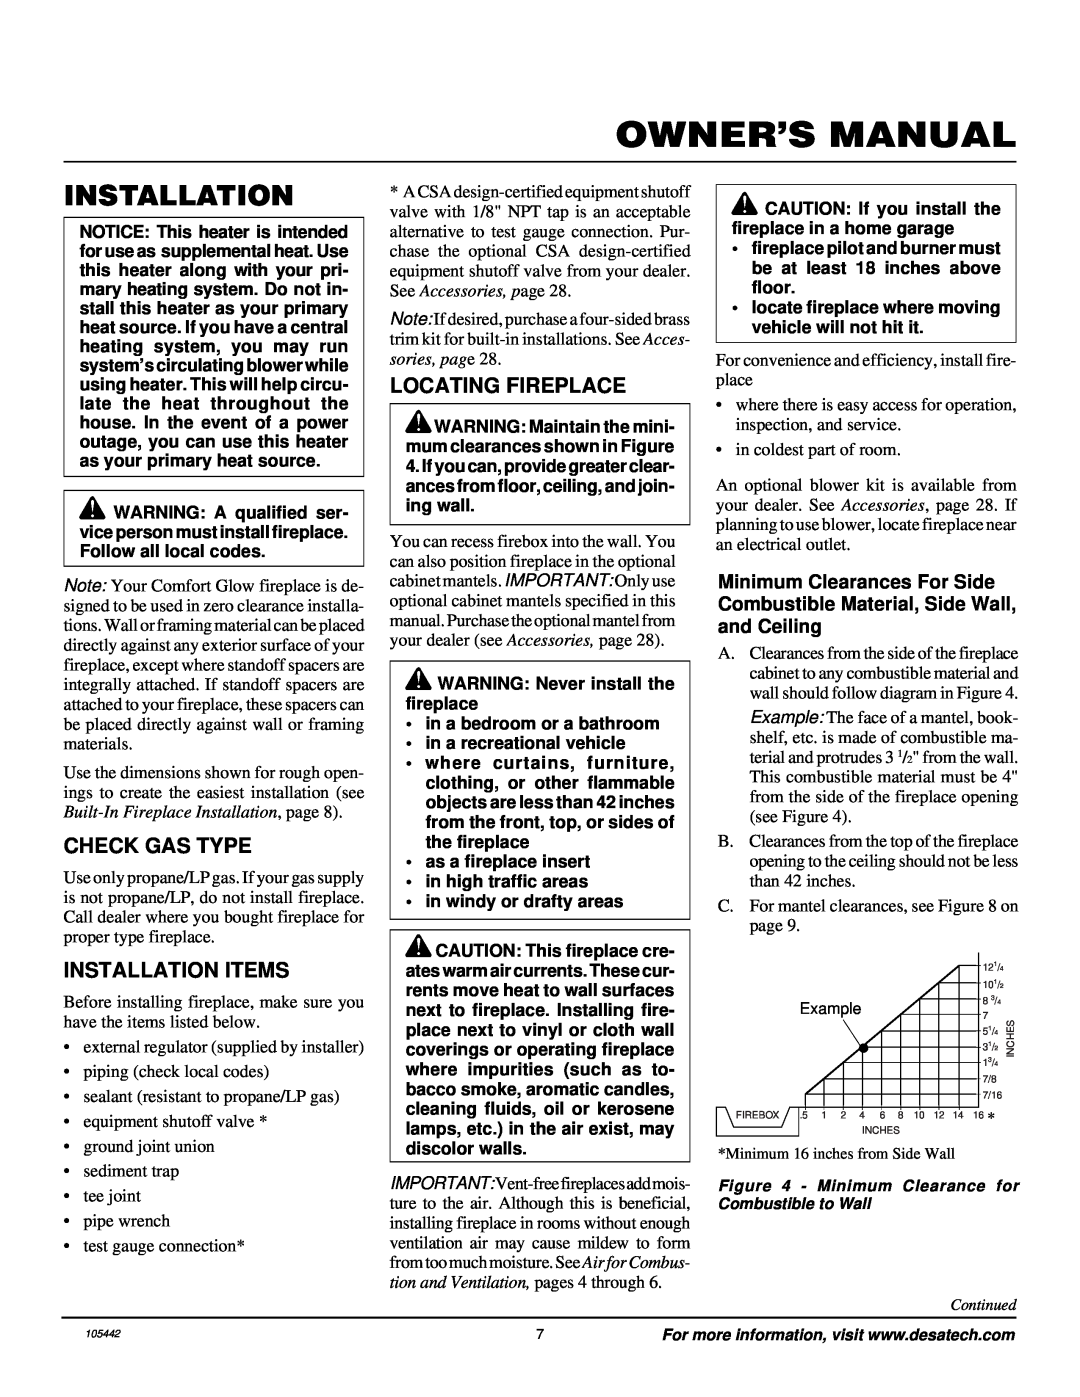 Desa CF26PR installation manual Check Gas Type, Installation Items, Locating Fireplace 